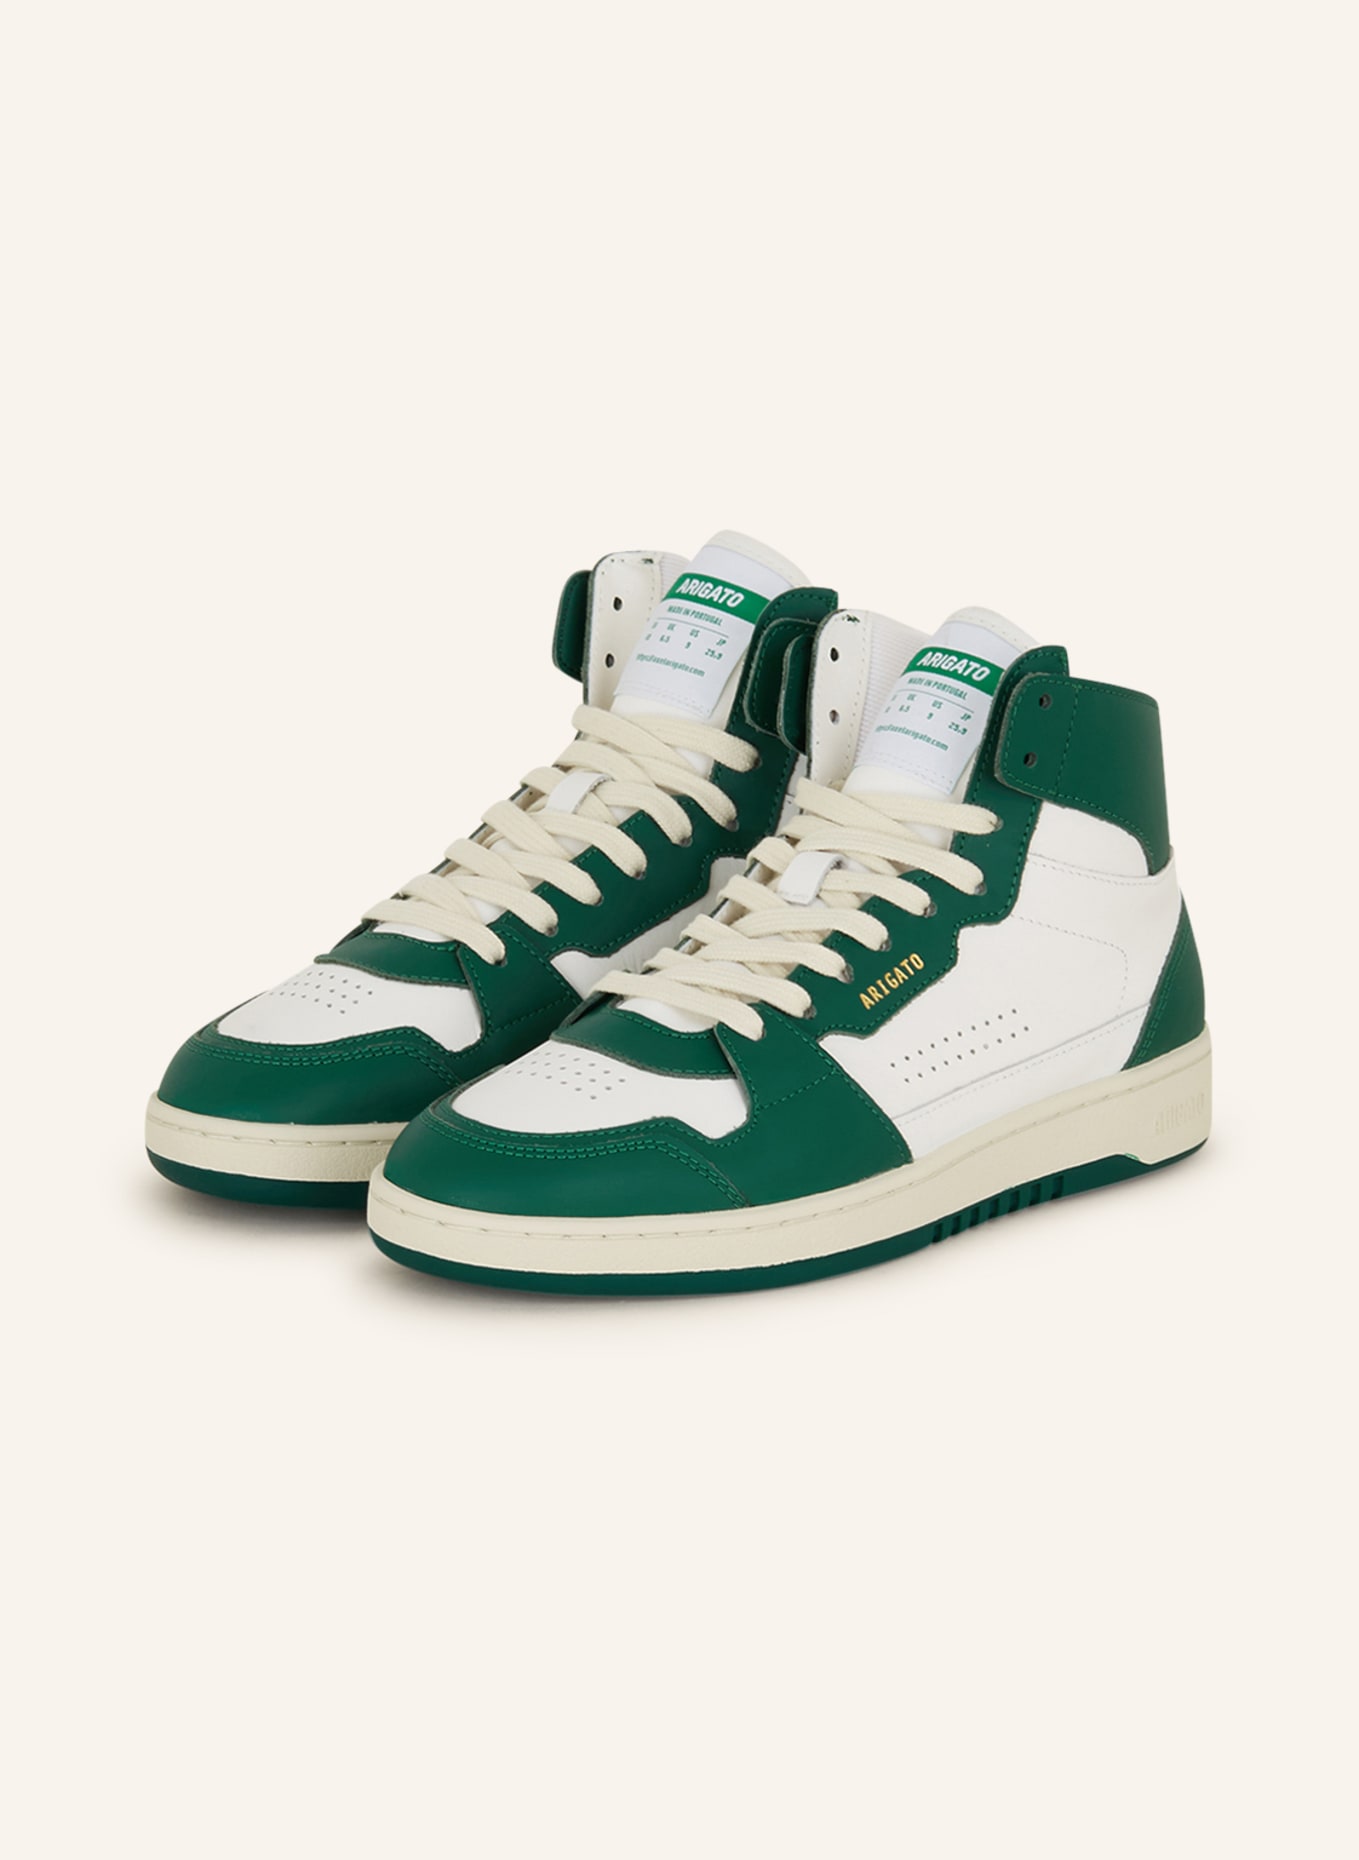 AXEL ARIGATO Hightop-Sneaker DICE HI, Farbe: WEISS/ GRÜN (Bild 1)